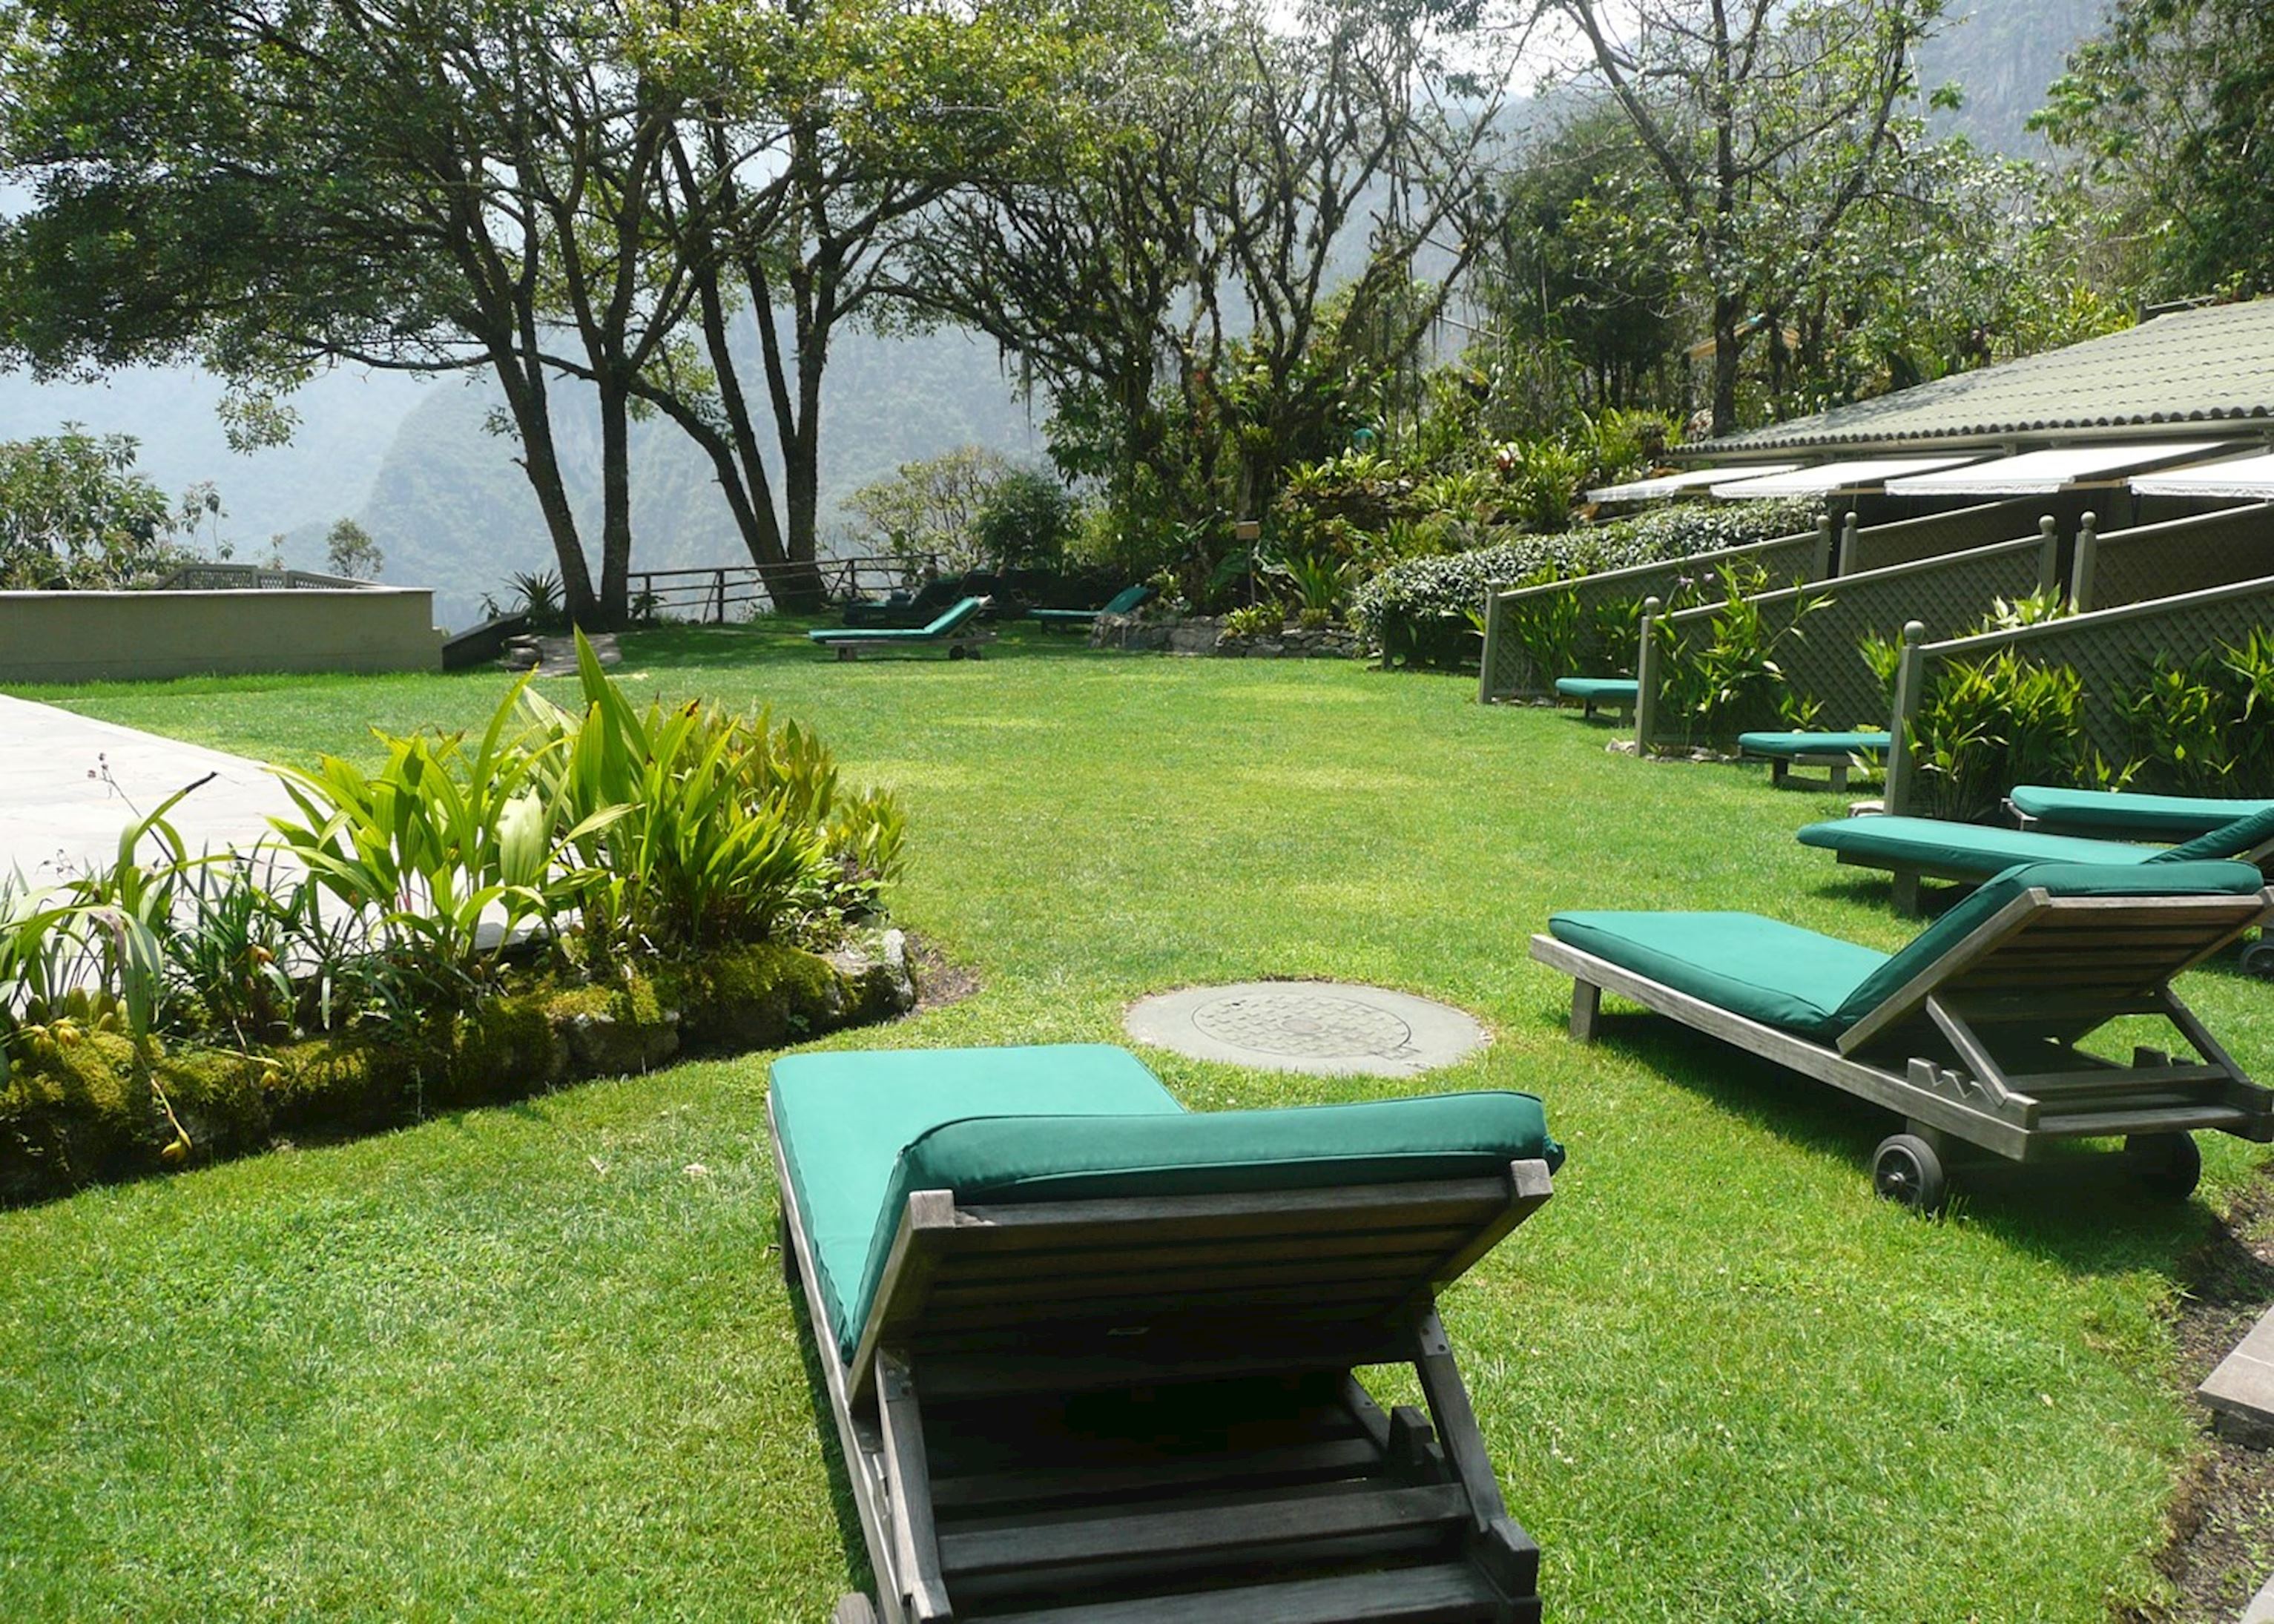 Belmond Sanctuary Lodge from $865. Machu Picchu Hotel Deals